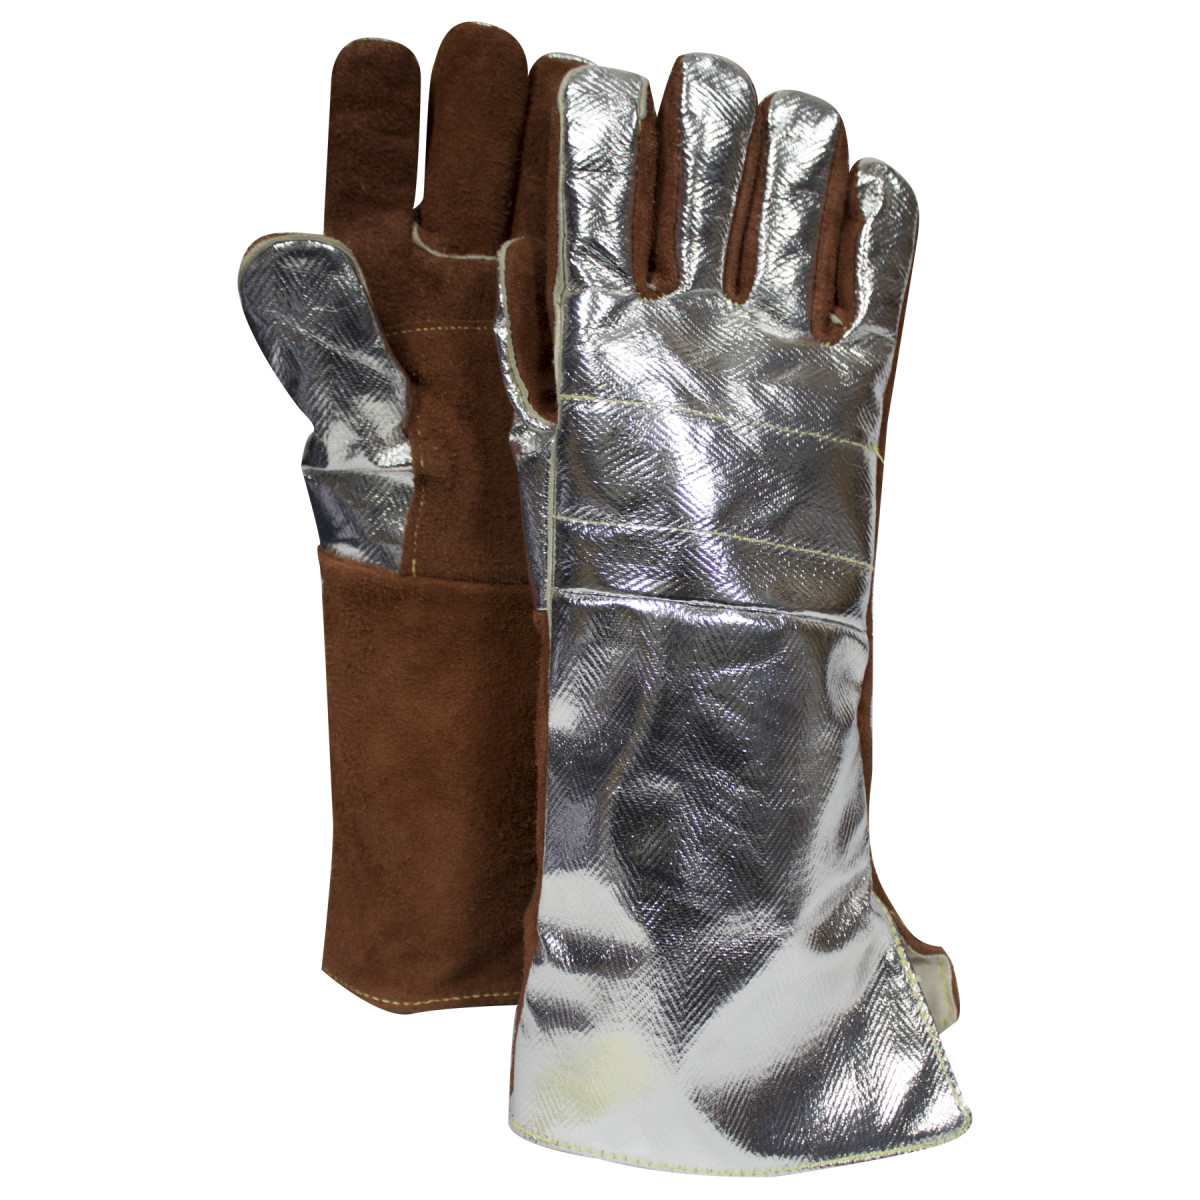 GT979 - Kevlar Heat Gloves (Pair)